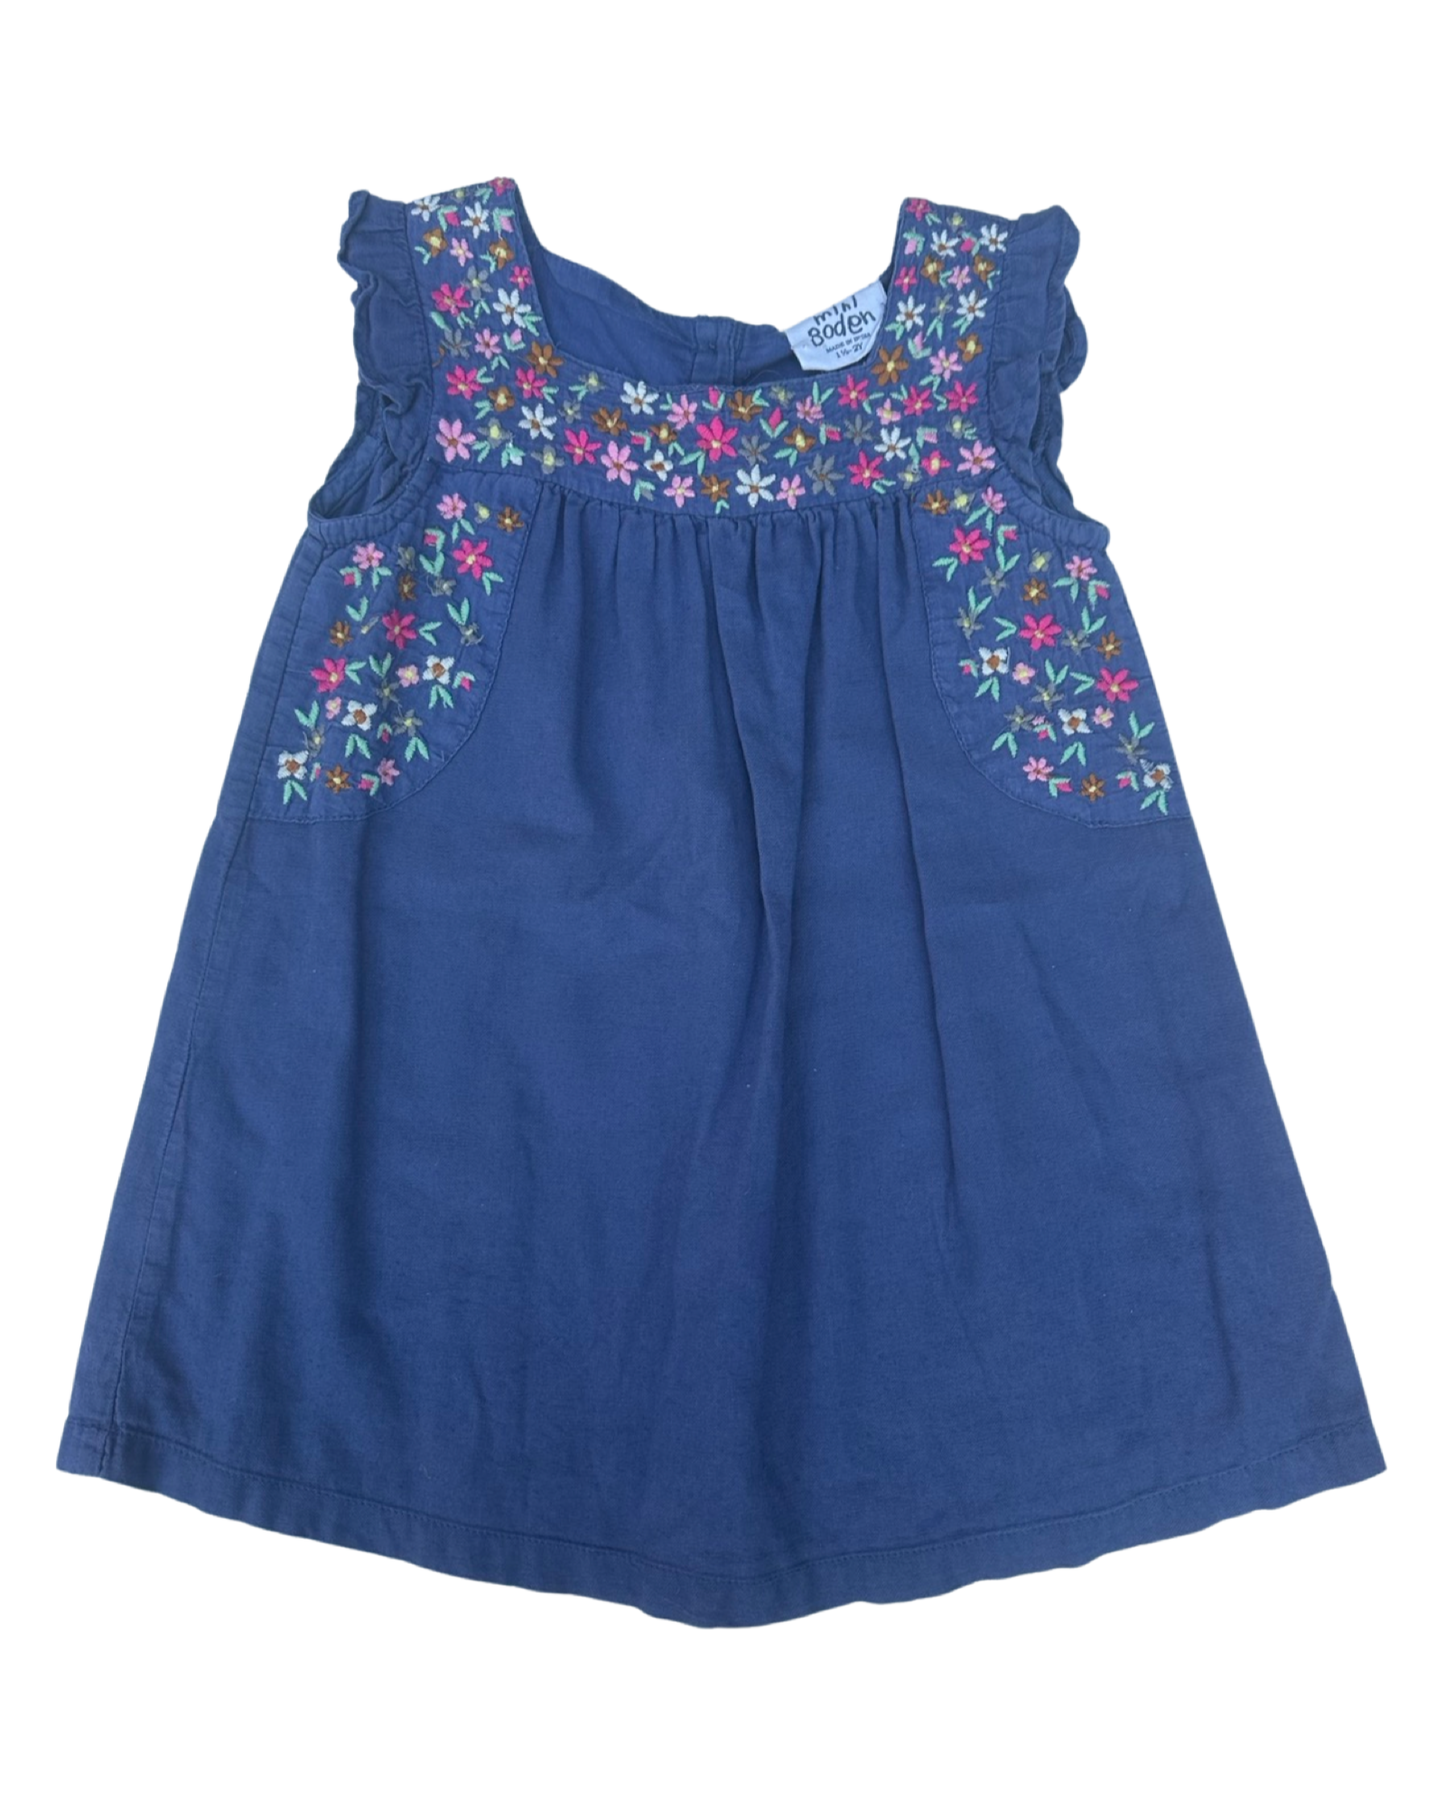 Baby Boden blue cotton floral dress (size 18-24mths)